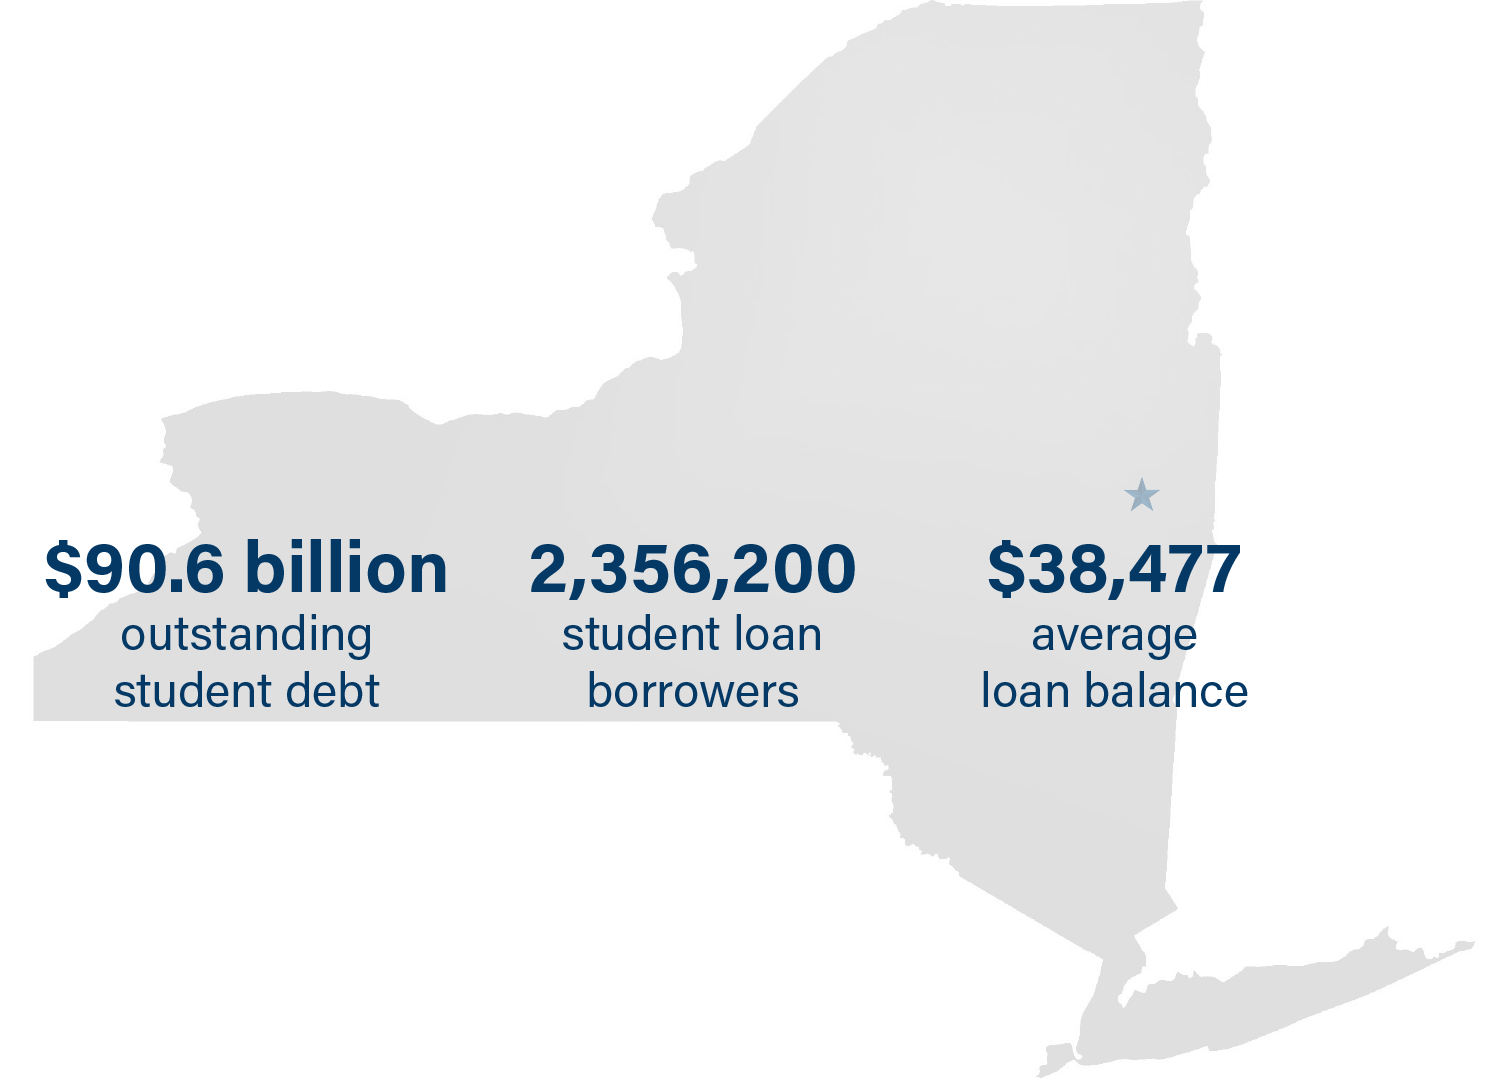 New York student loan statistics:

$90.6 billion in outstanding student debt
2,356,200 student loan borrowers
$38,477 in average student loan balances
